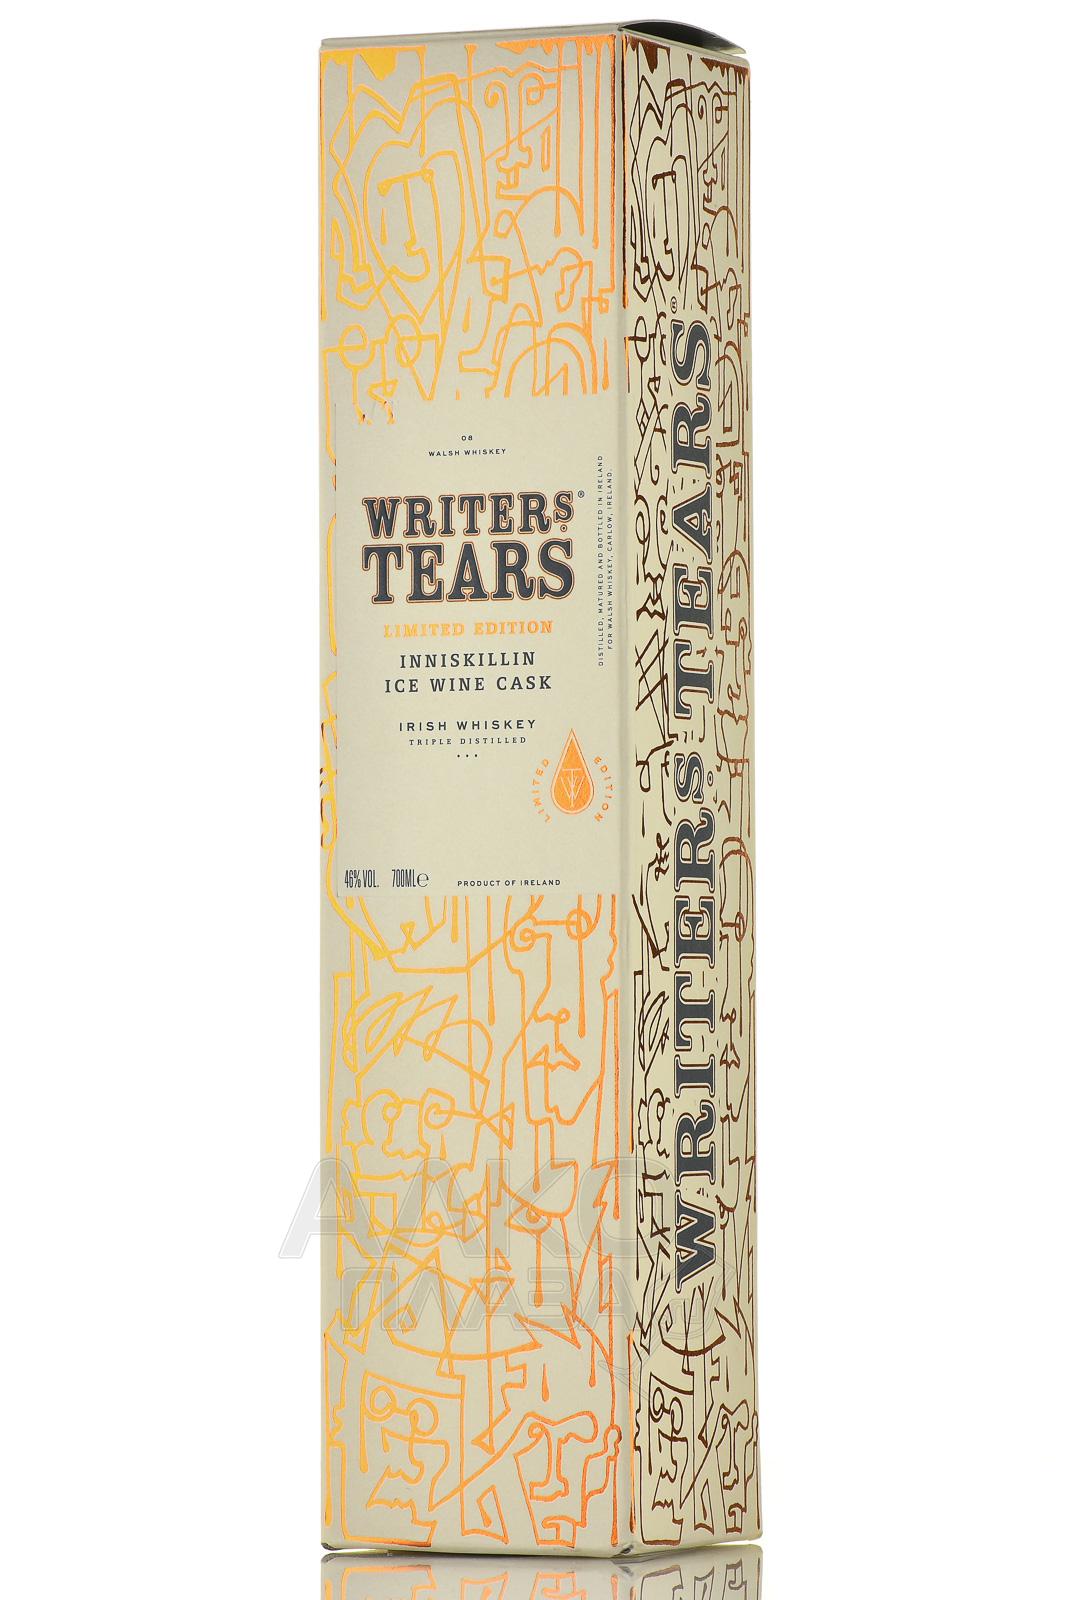 Writers tears 0.7. Writers tears виски. Виски райтерс Тирс цена 0.7.